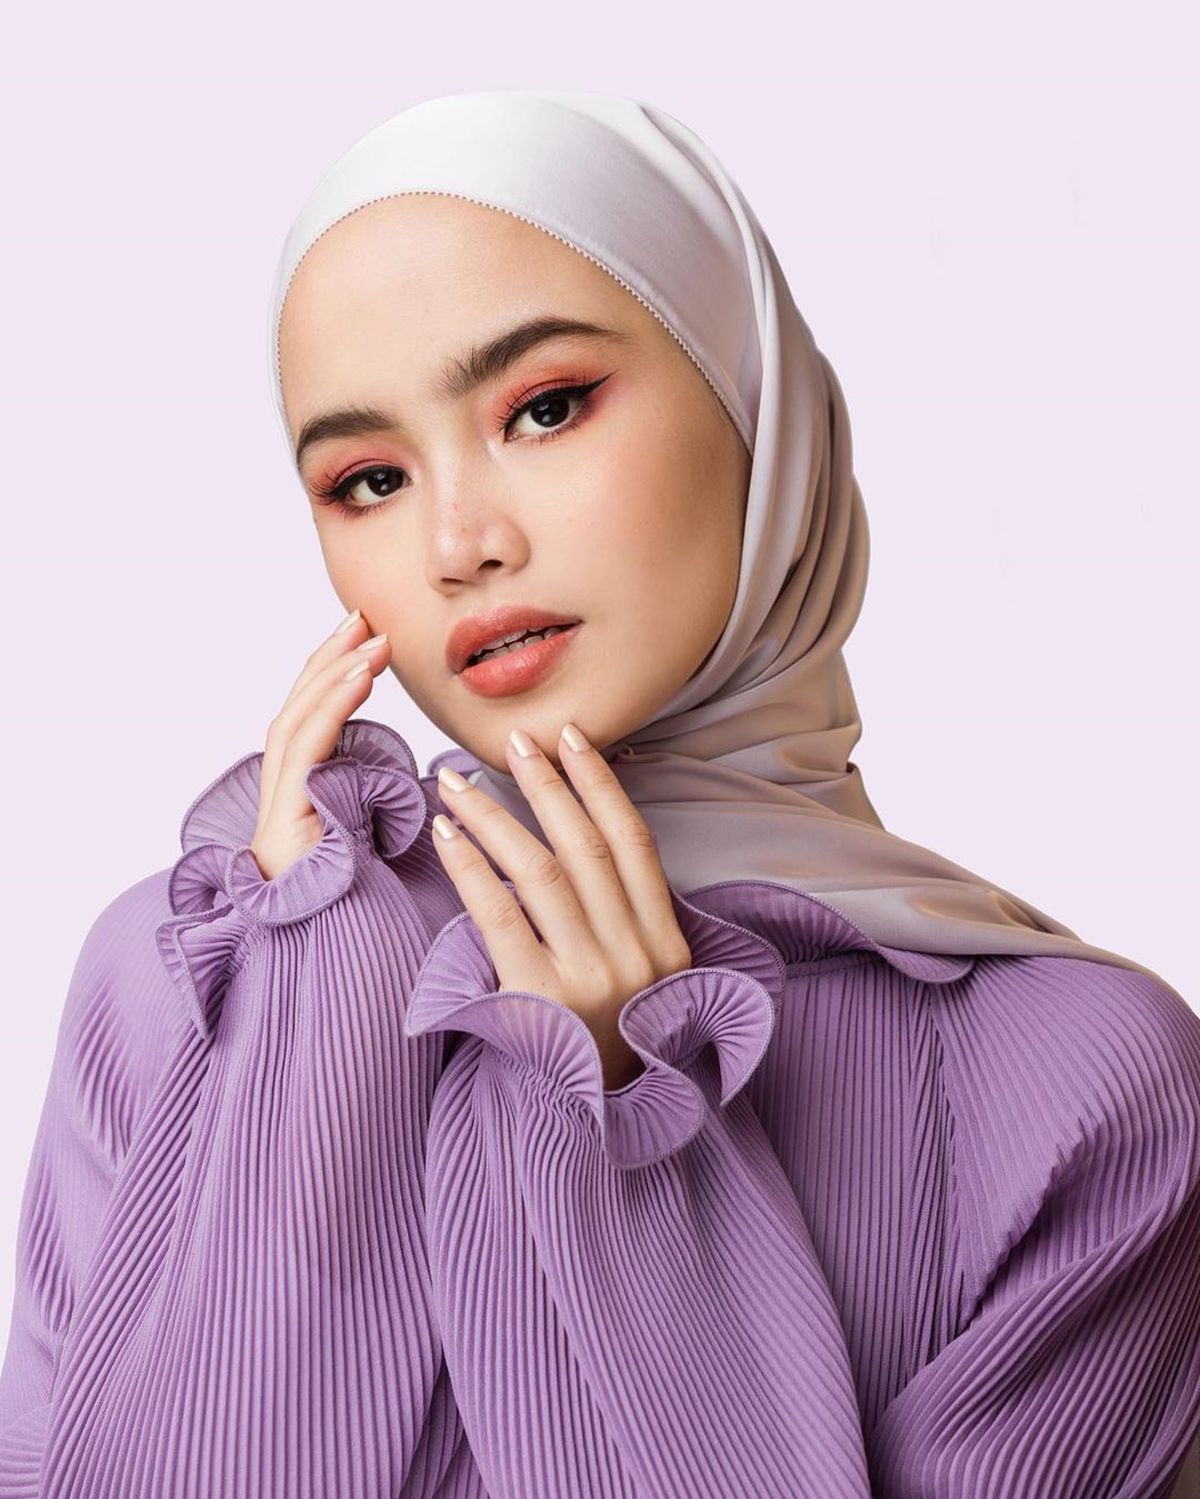 Buat Hijabers Intip 10 Inspirasi Padu Padan Warna Lilac Yang Tren Di 2020